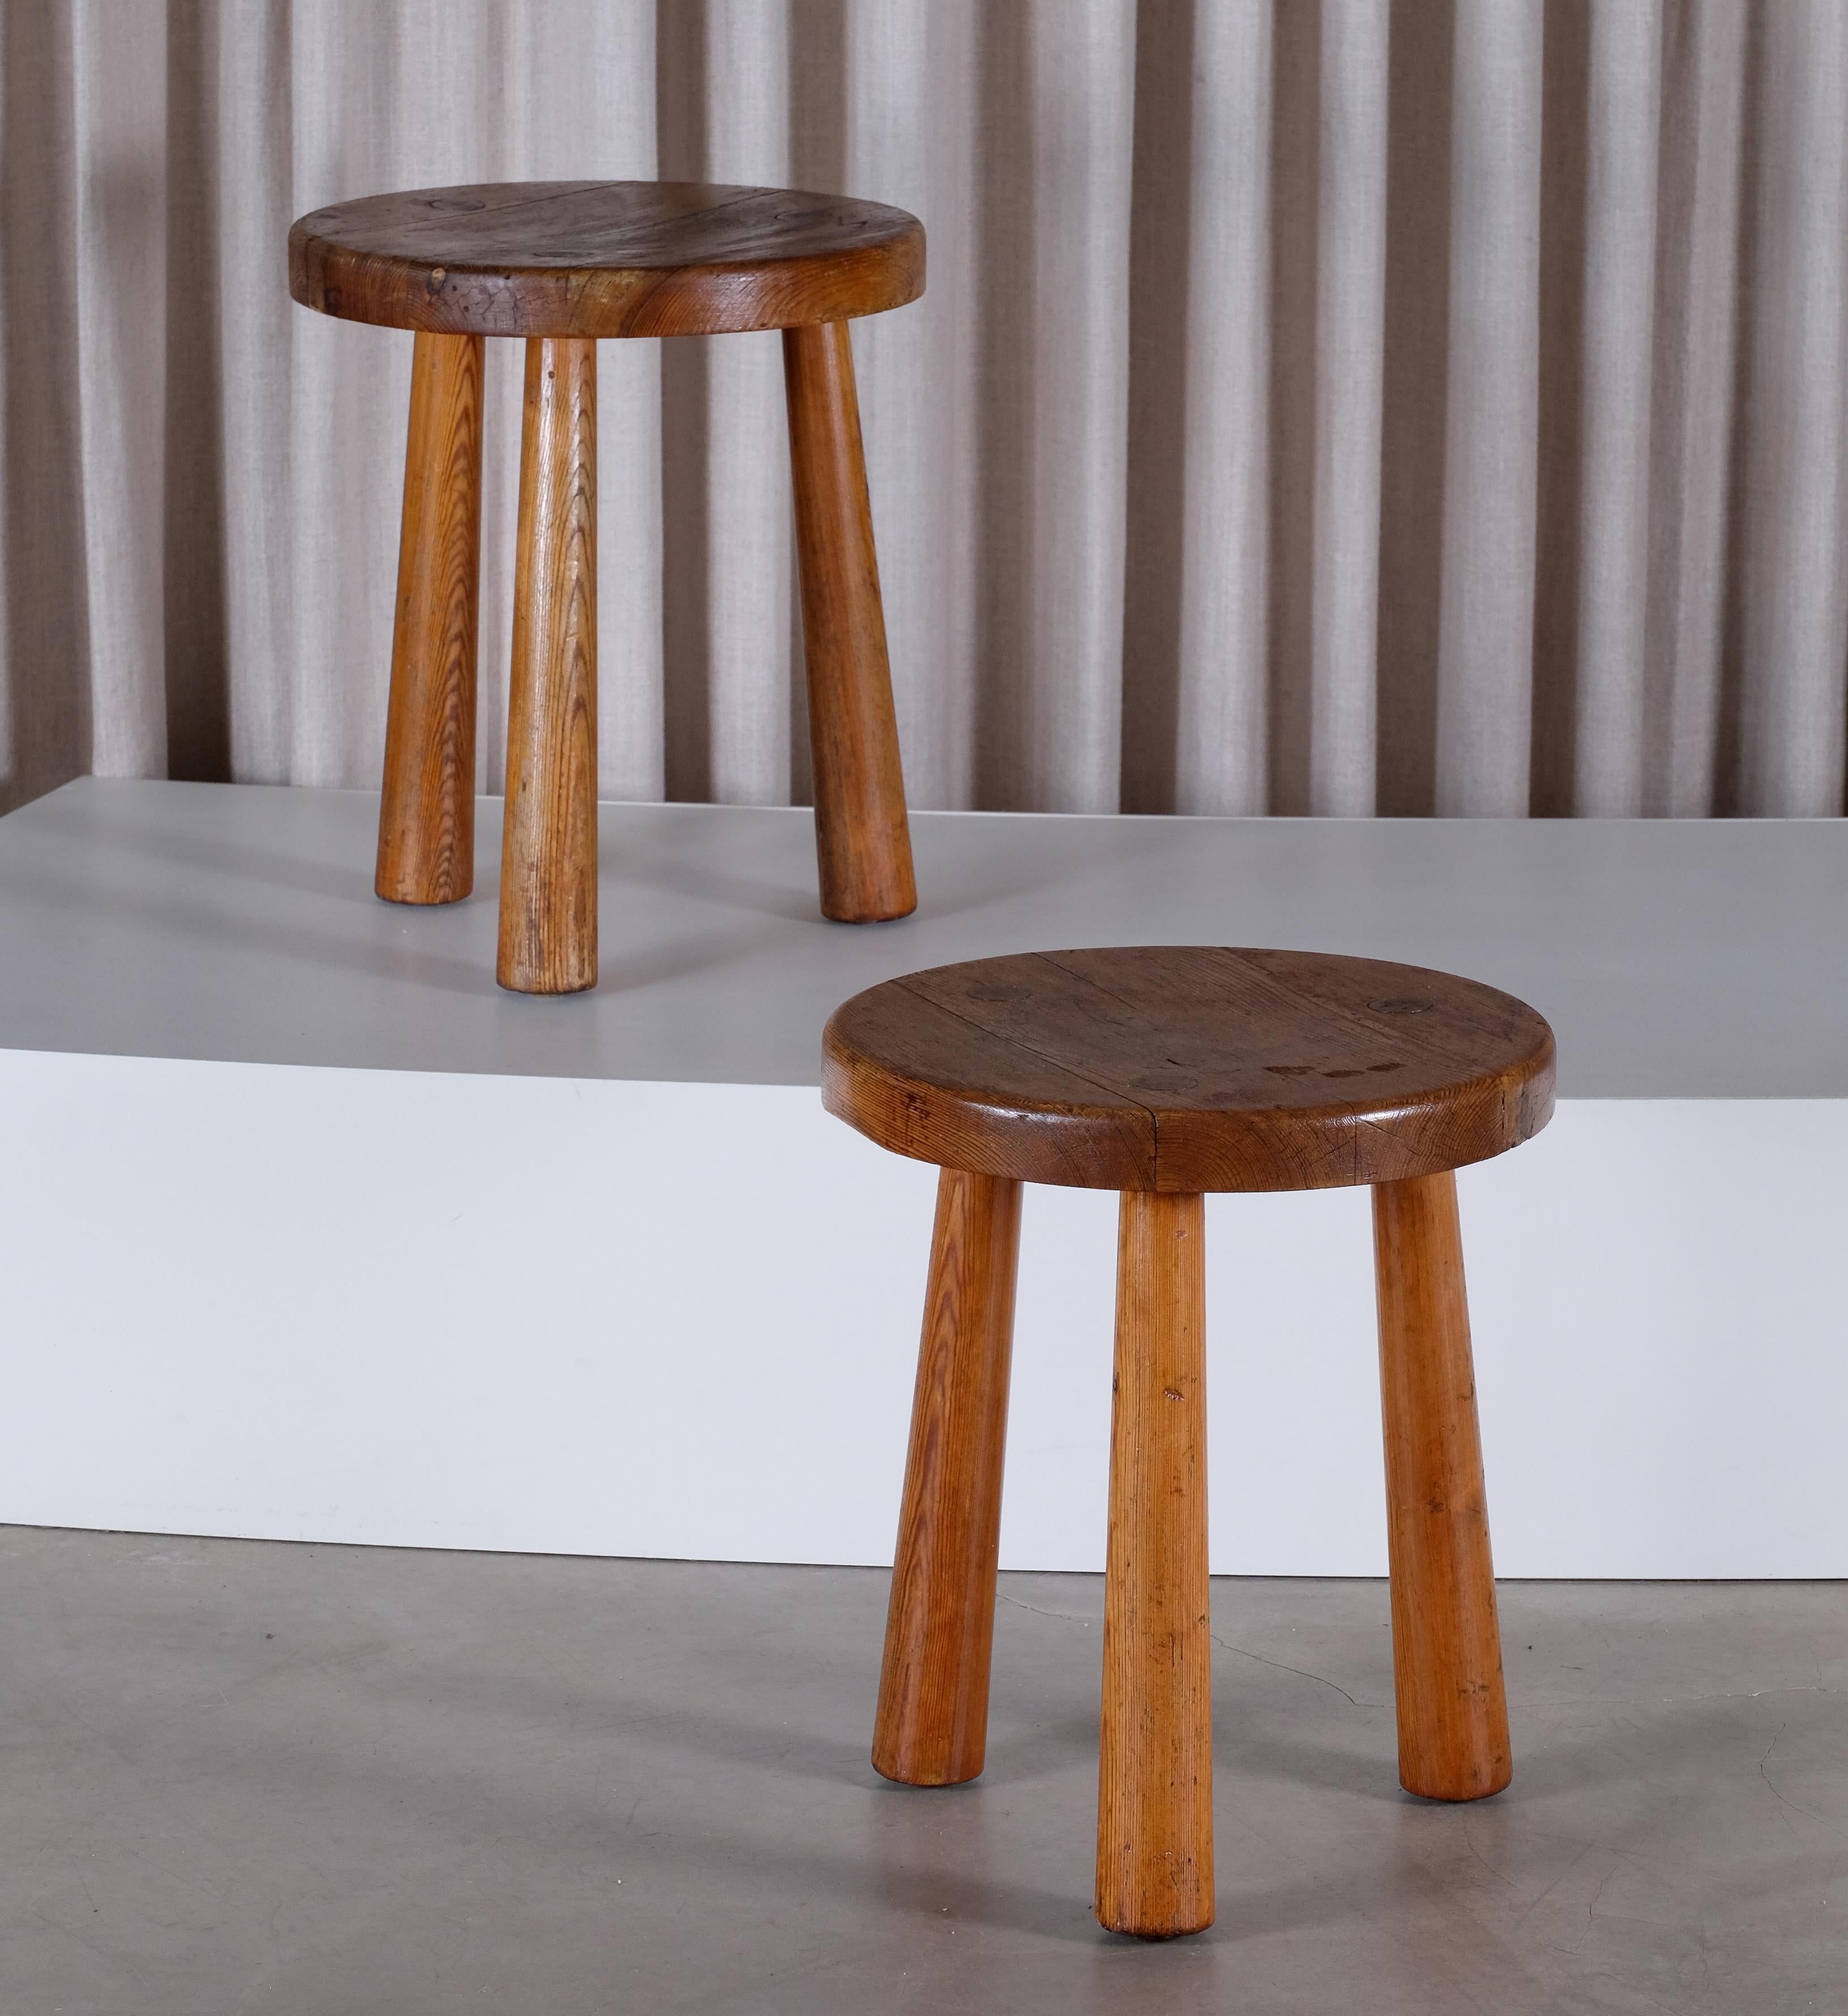 Rare pair of Skoga pine stools / side tables designed by Axel-Einar Hjorth, 1930s.
Produced by Nordiska Kompaniet.